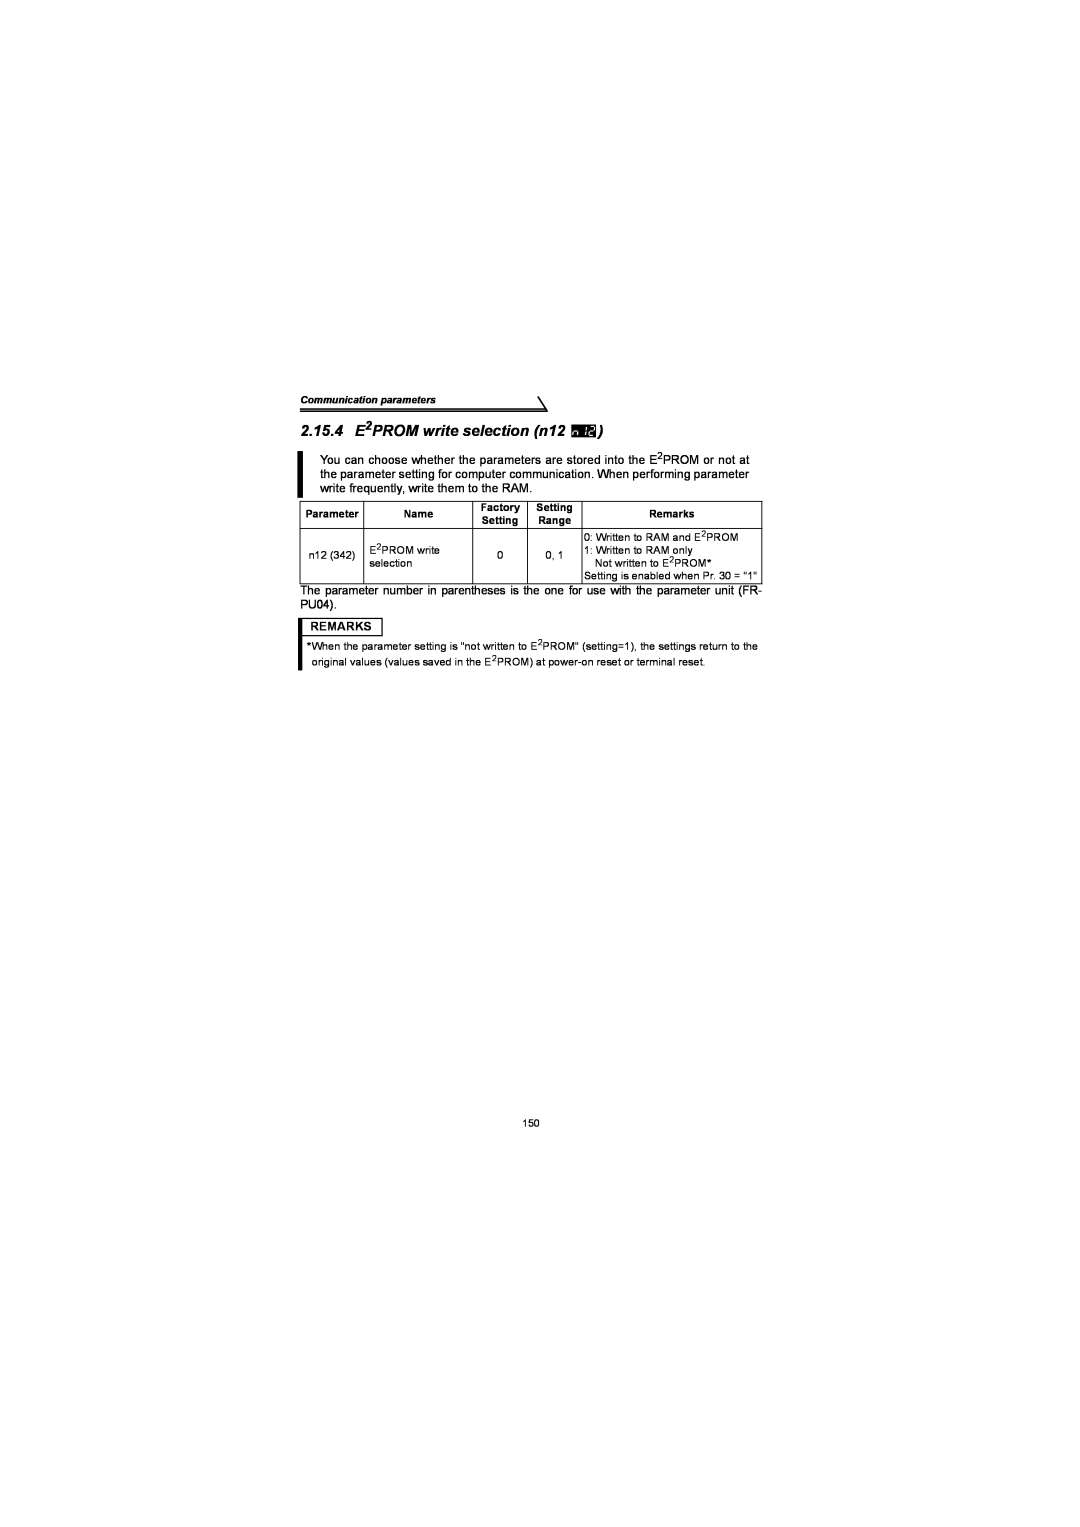 Mitsubishi Electronics FR-S500 instruction manual 2.15.4 E2PROM write selection n12, Remarks 